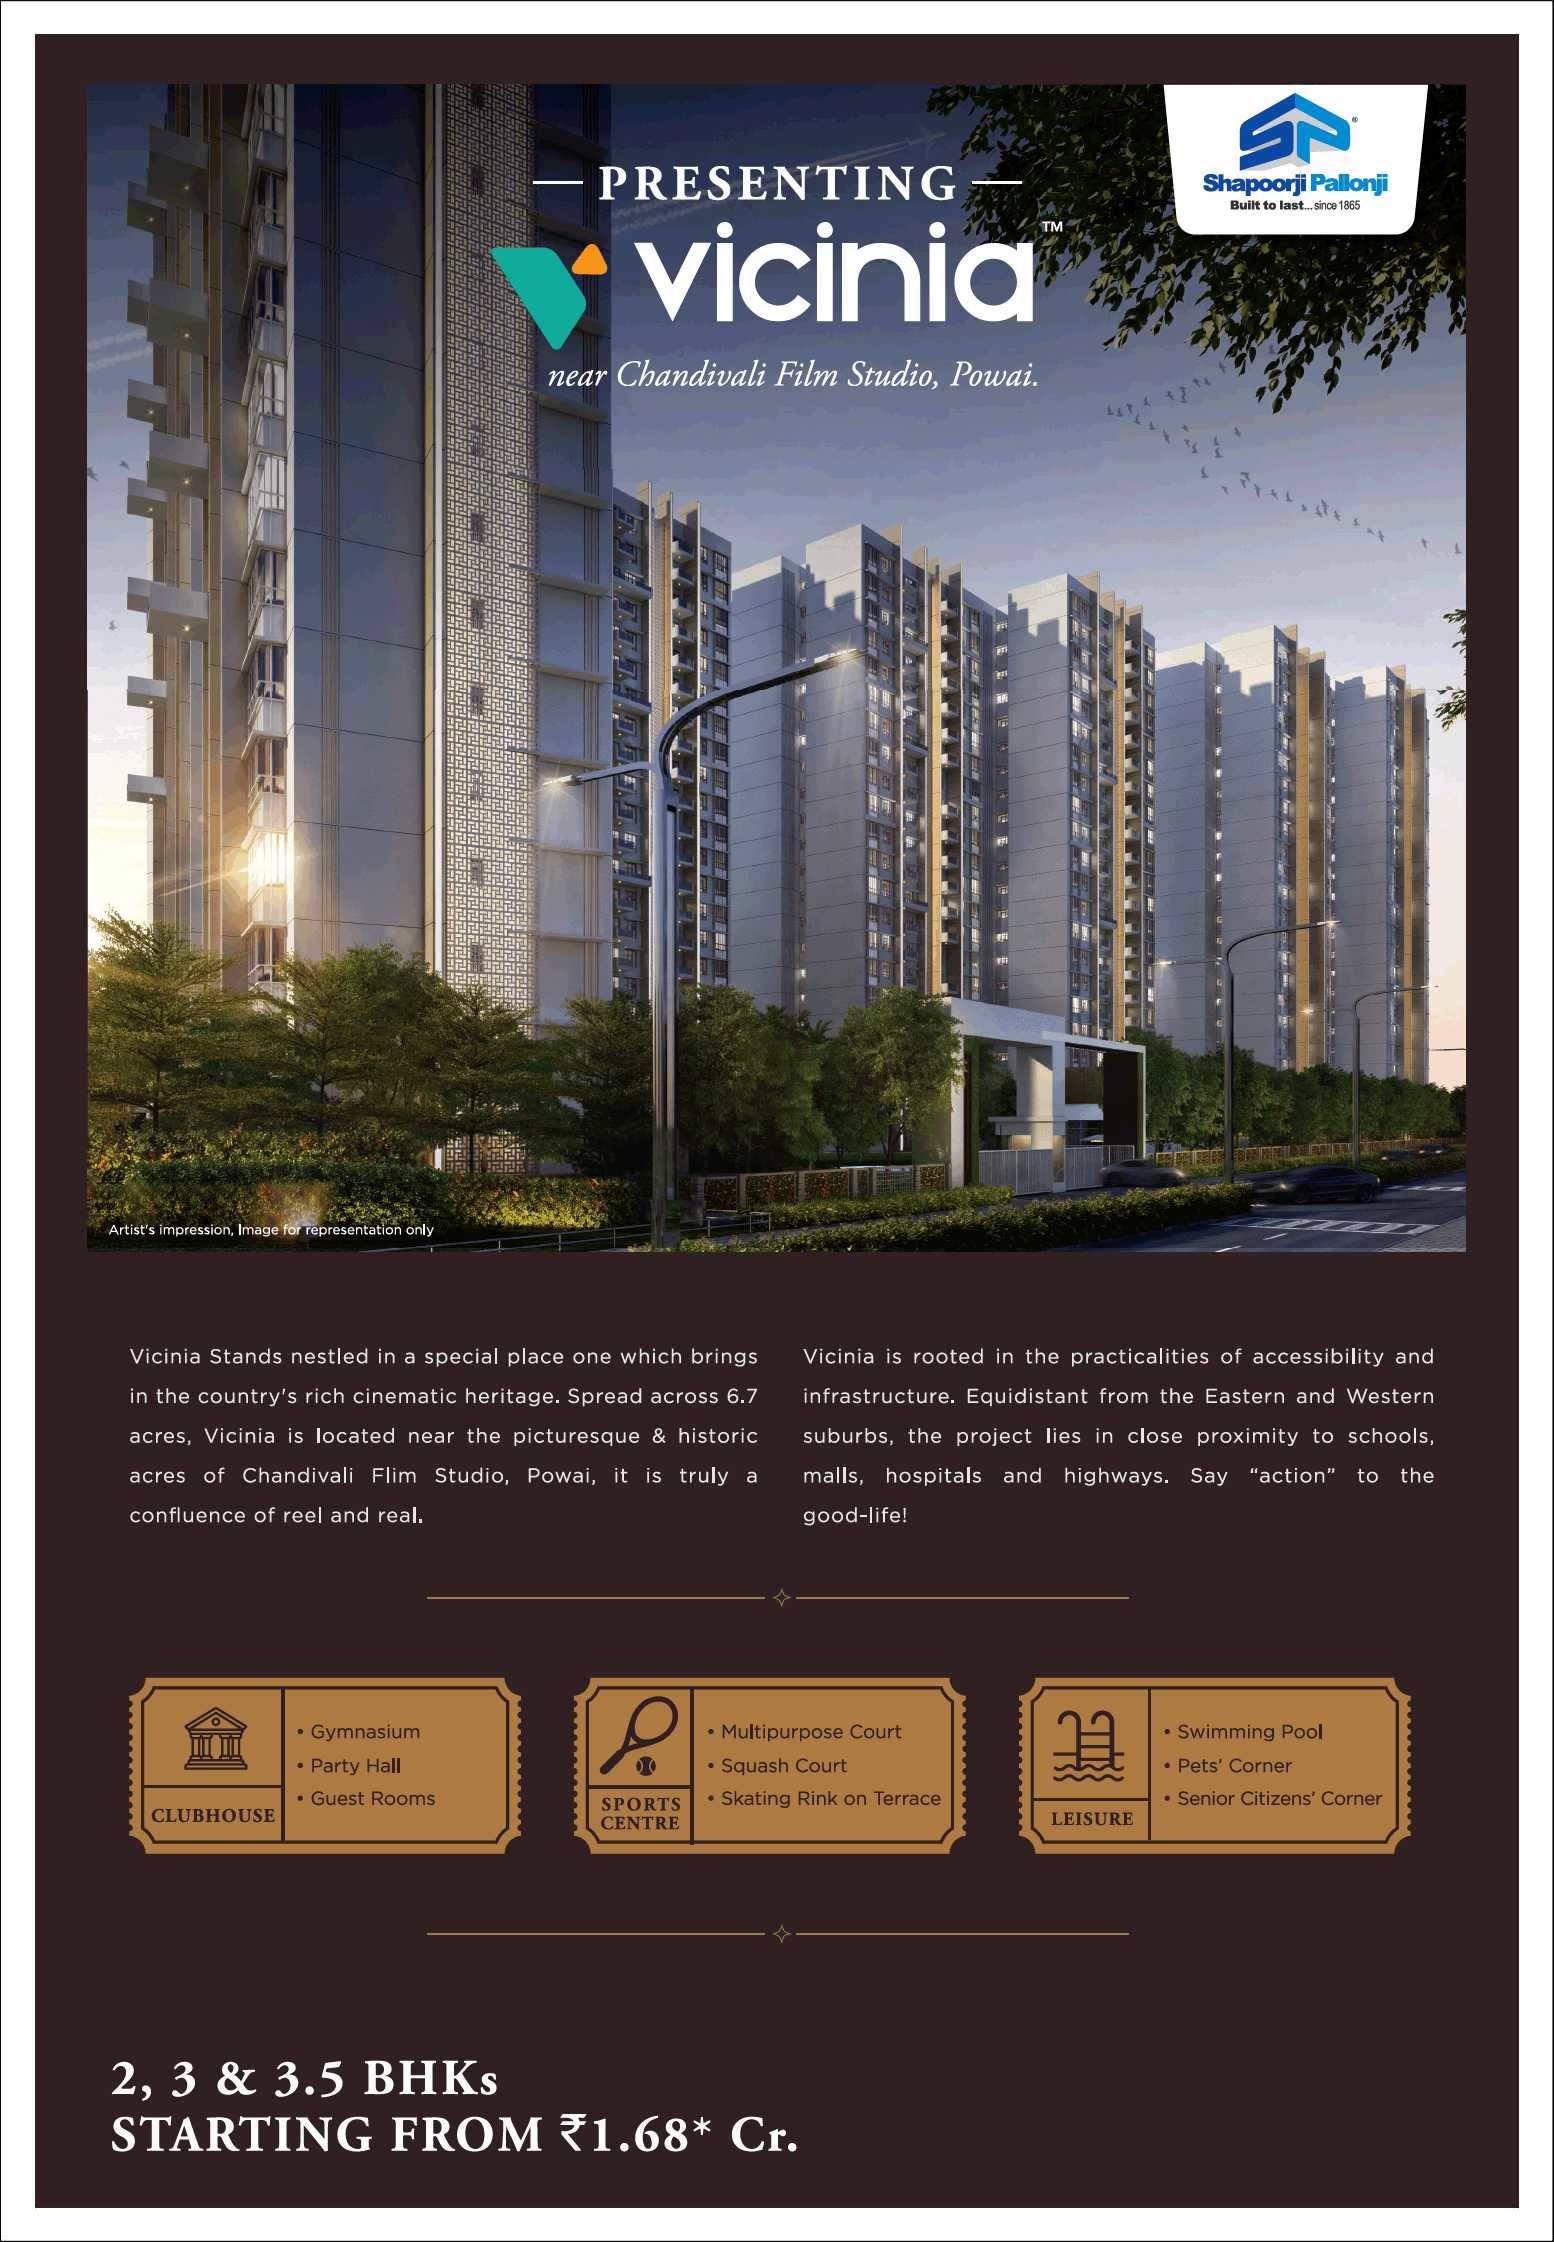 Book luxury apartments @ Rs. 1.68 Cr. at Shapoorji Pallonji Vicinia in Mumbai Update